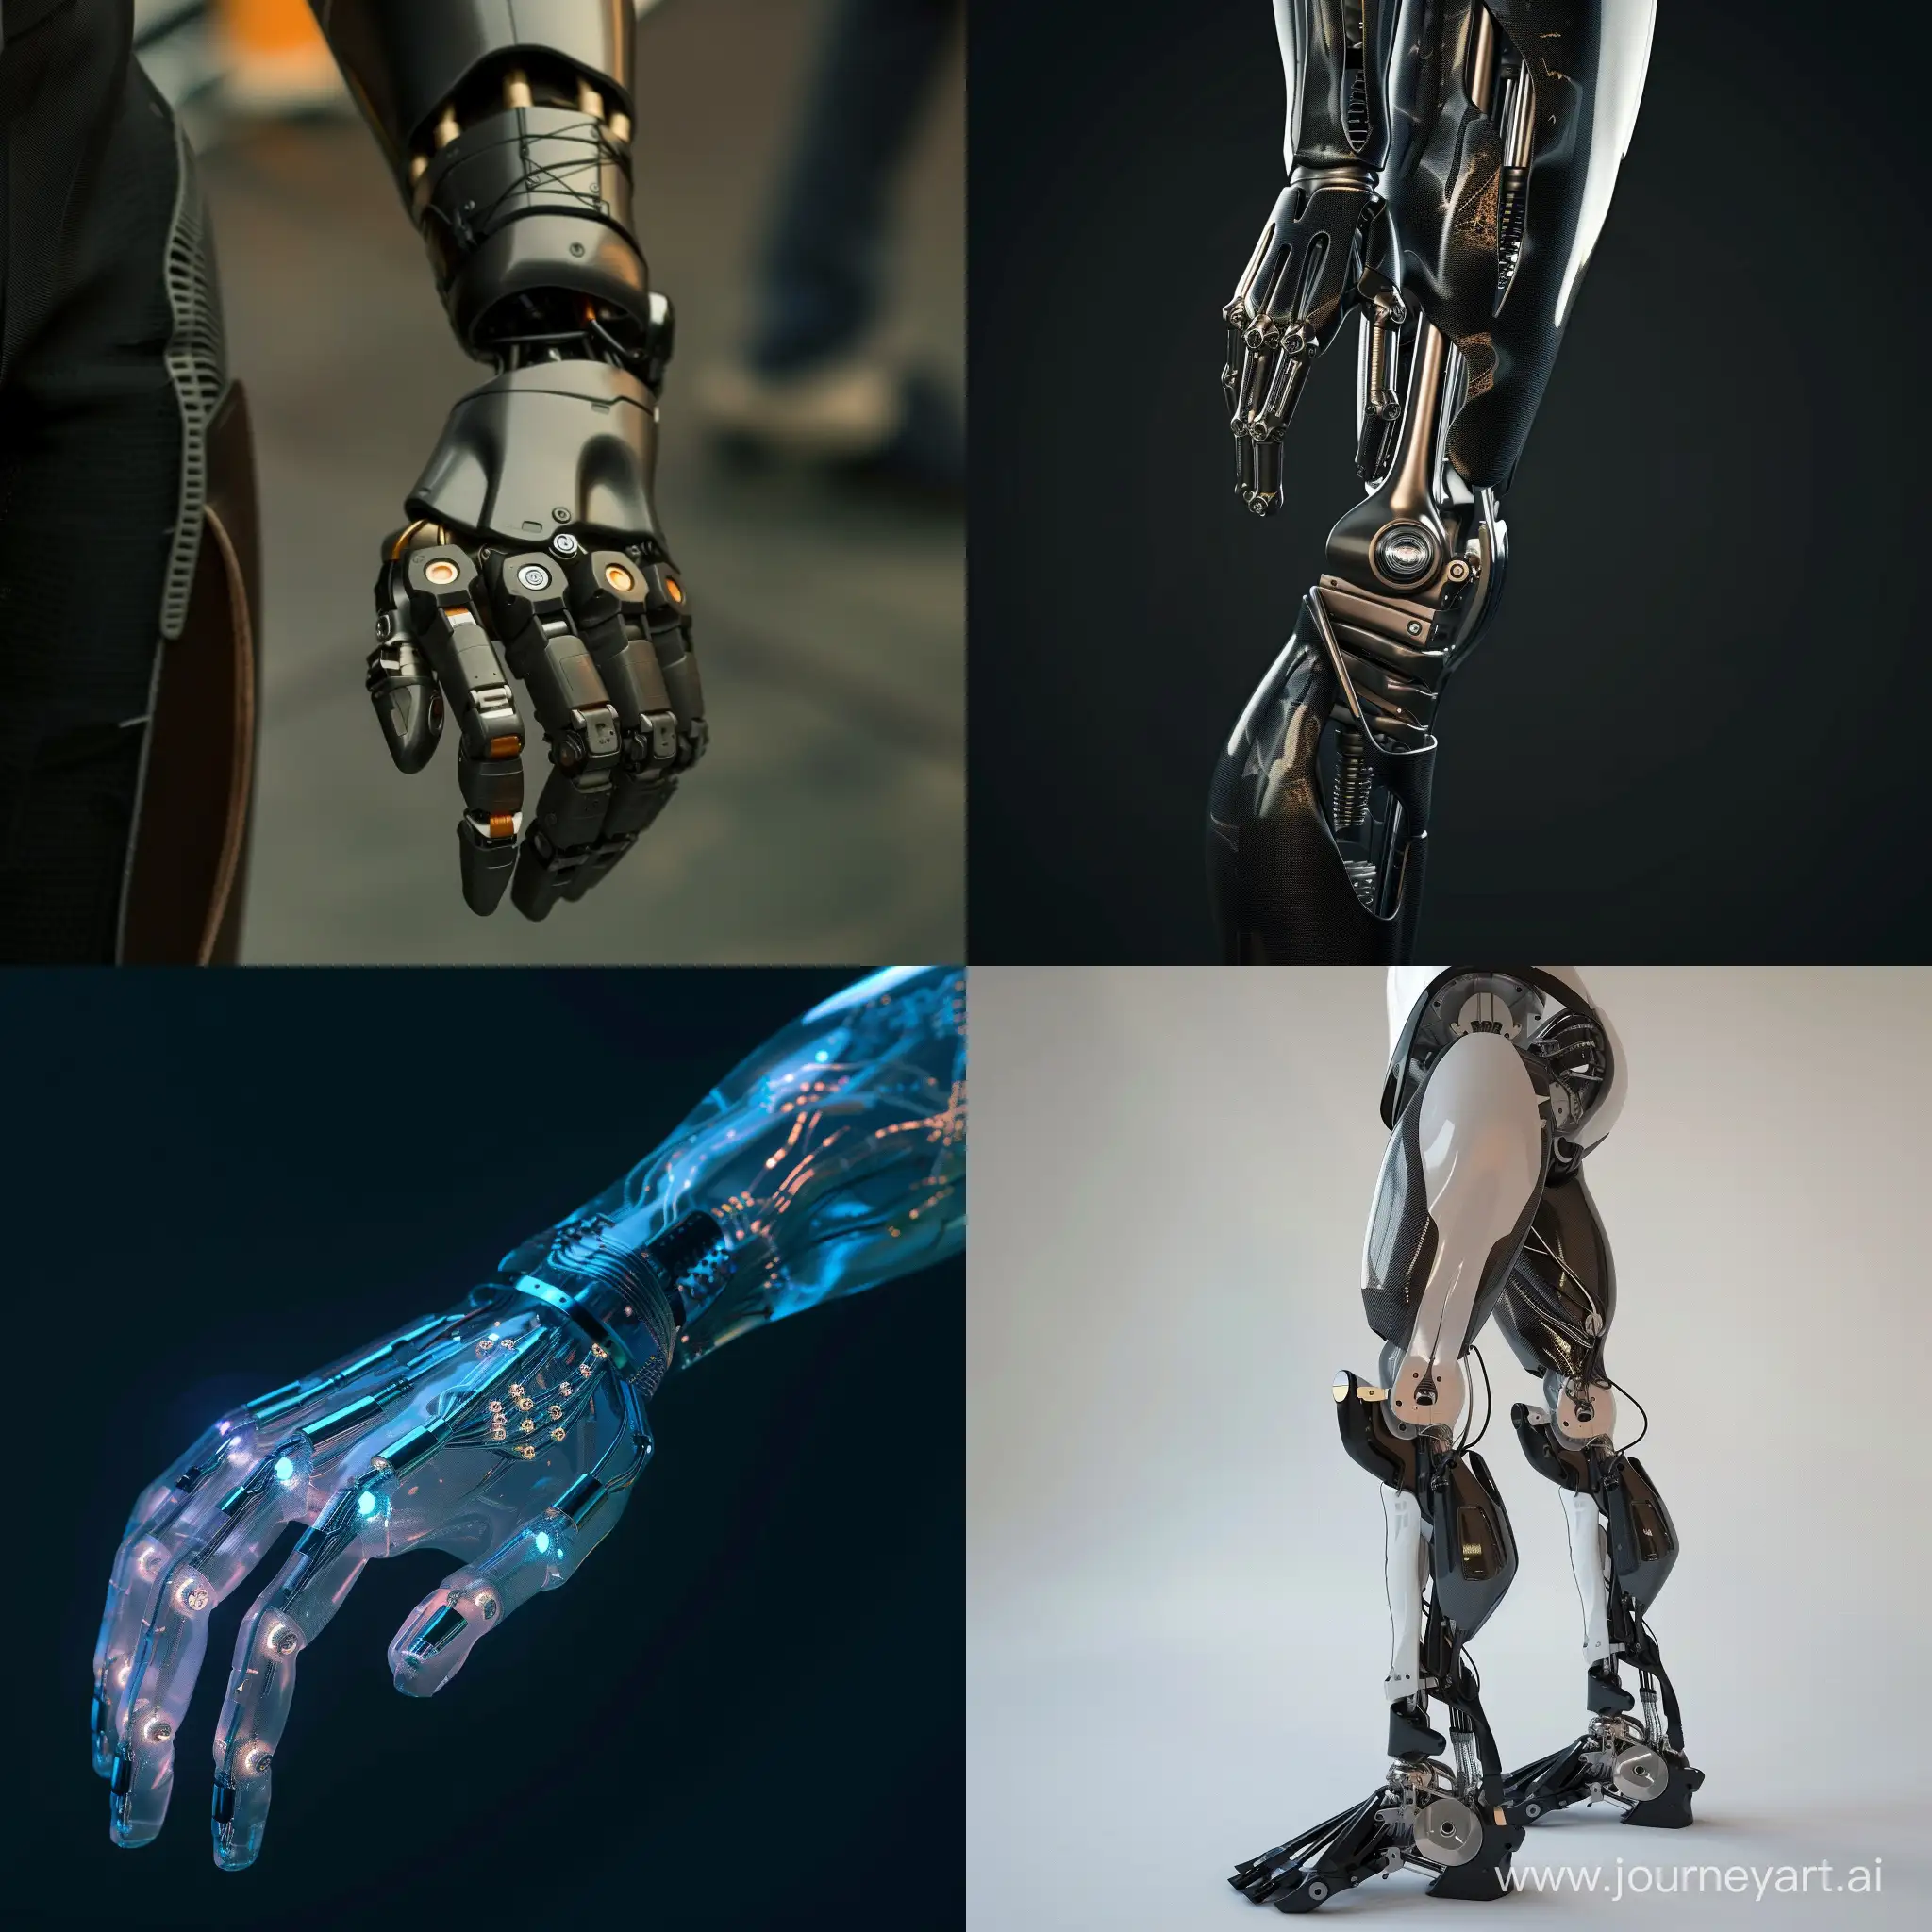 Futuristic-Bionic-Prosthesis-Concept-Advanced-Technology-in-a-11-Aspect-Ratio